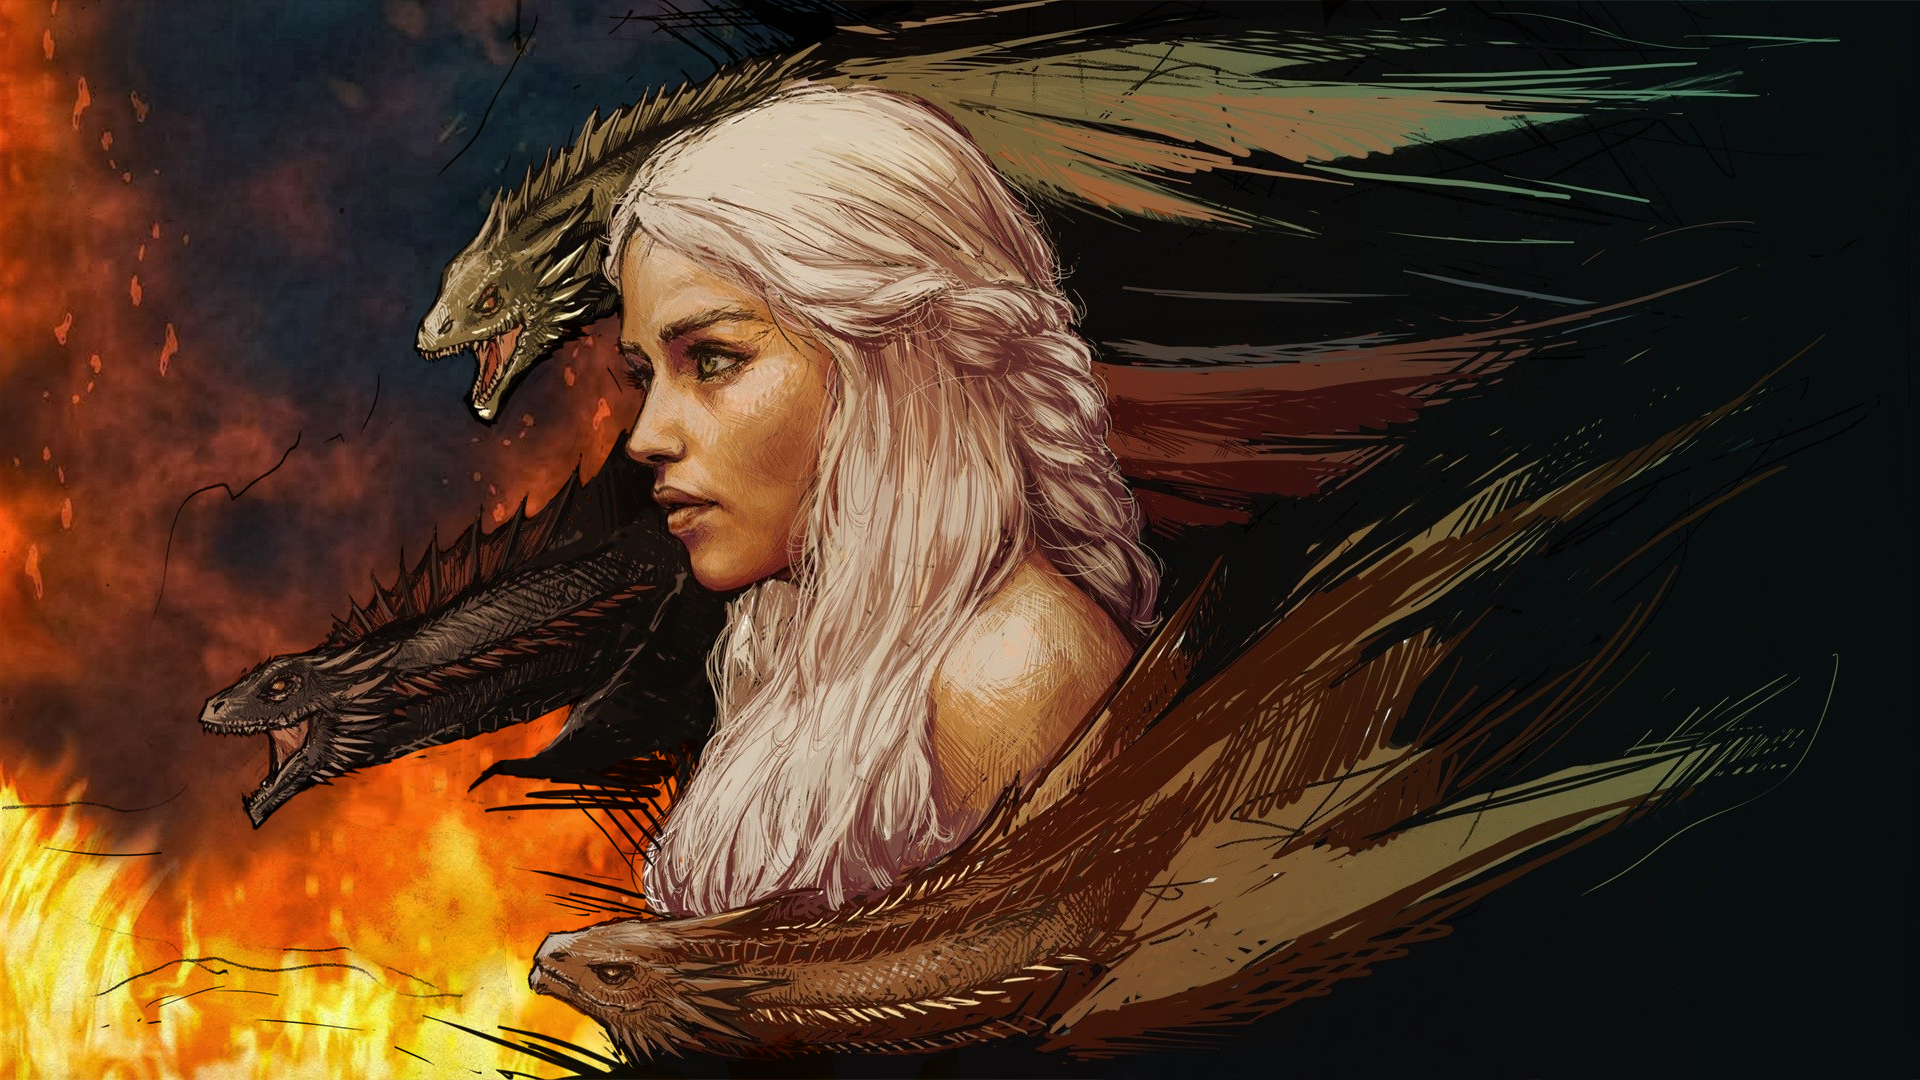 People 1920x1080 Game of Thrones Daenerys Targaryen dragon fire TV series women